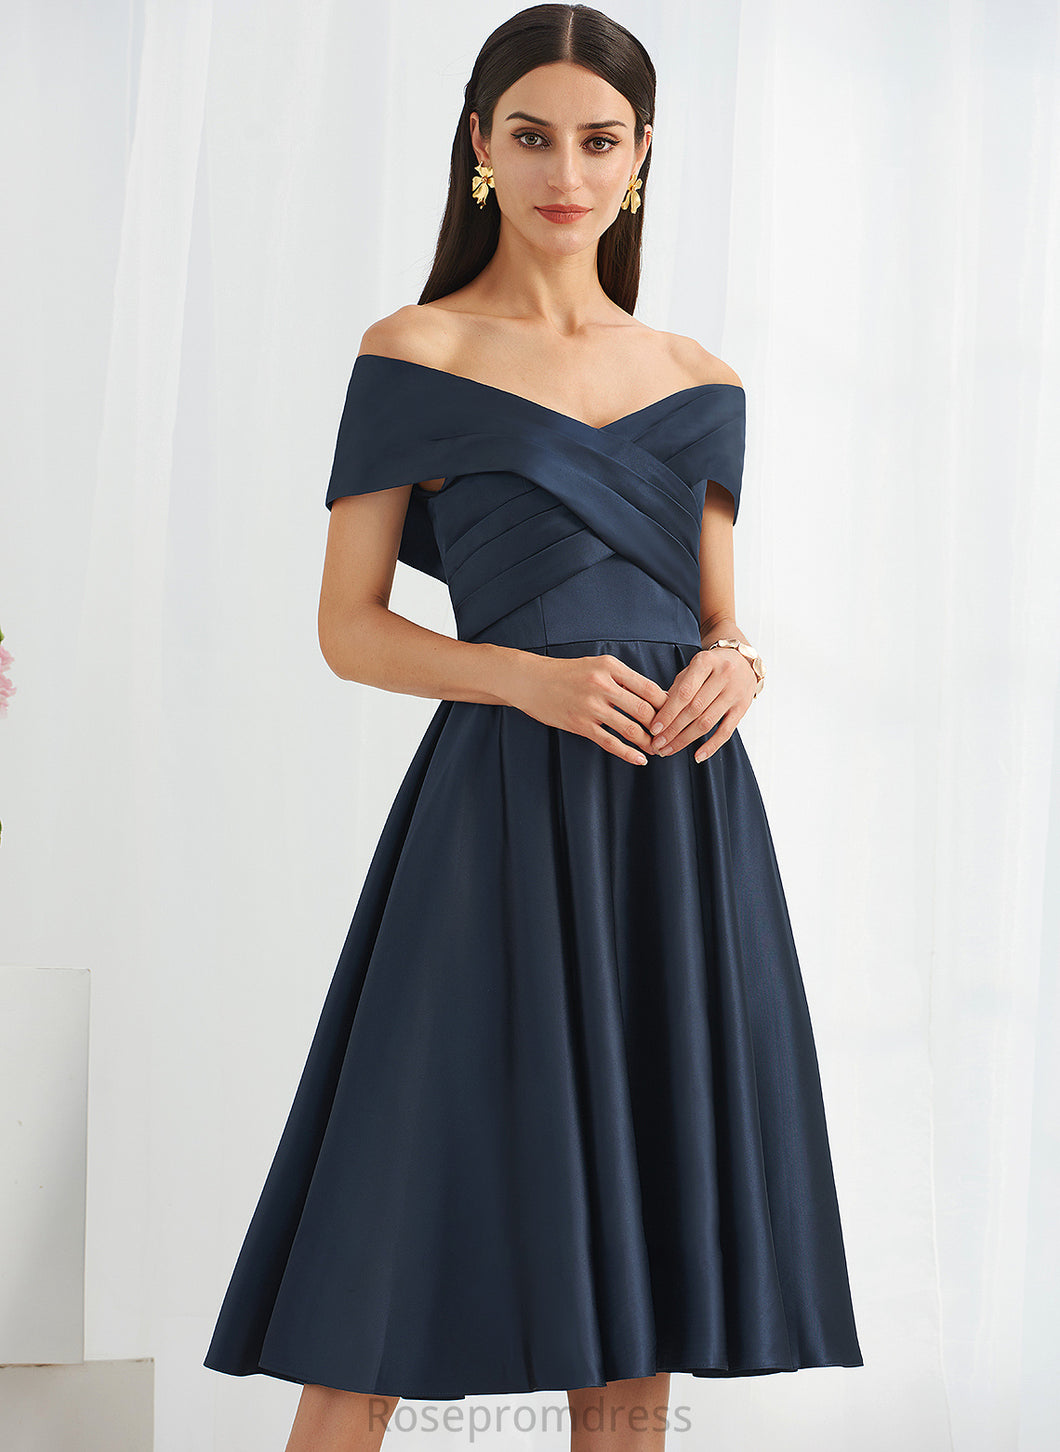 Silhouette Fabric Pockets Knee-Length A-Line Length Off-the-Shoulder Embellishment Neckline Jan Scoop Natural Waist Bridesmaid Dresses